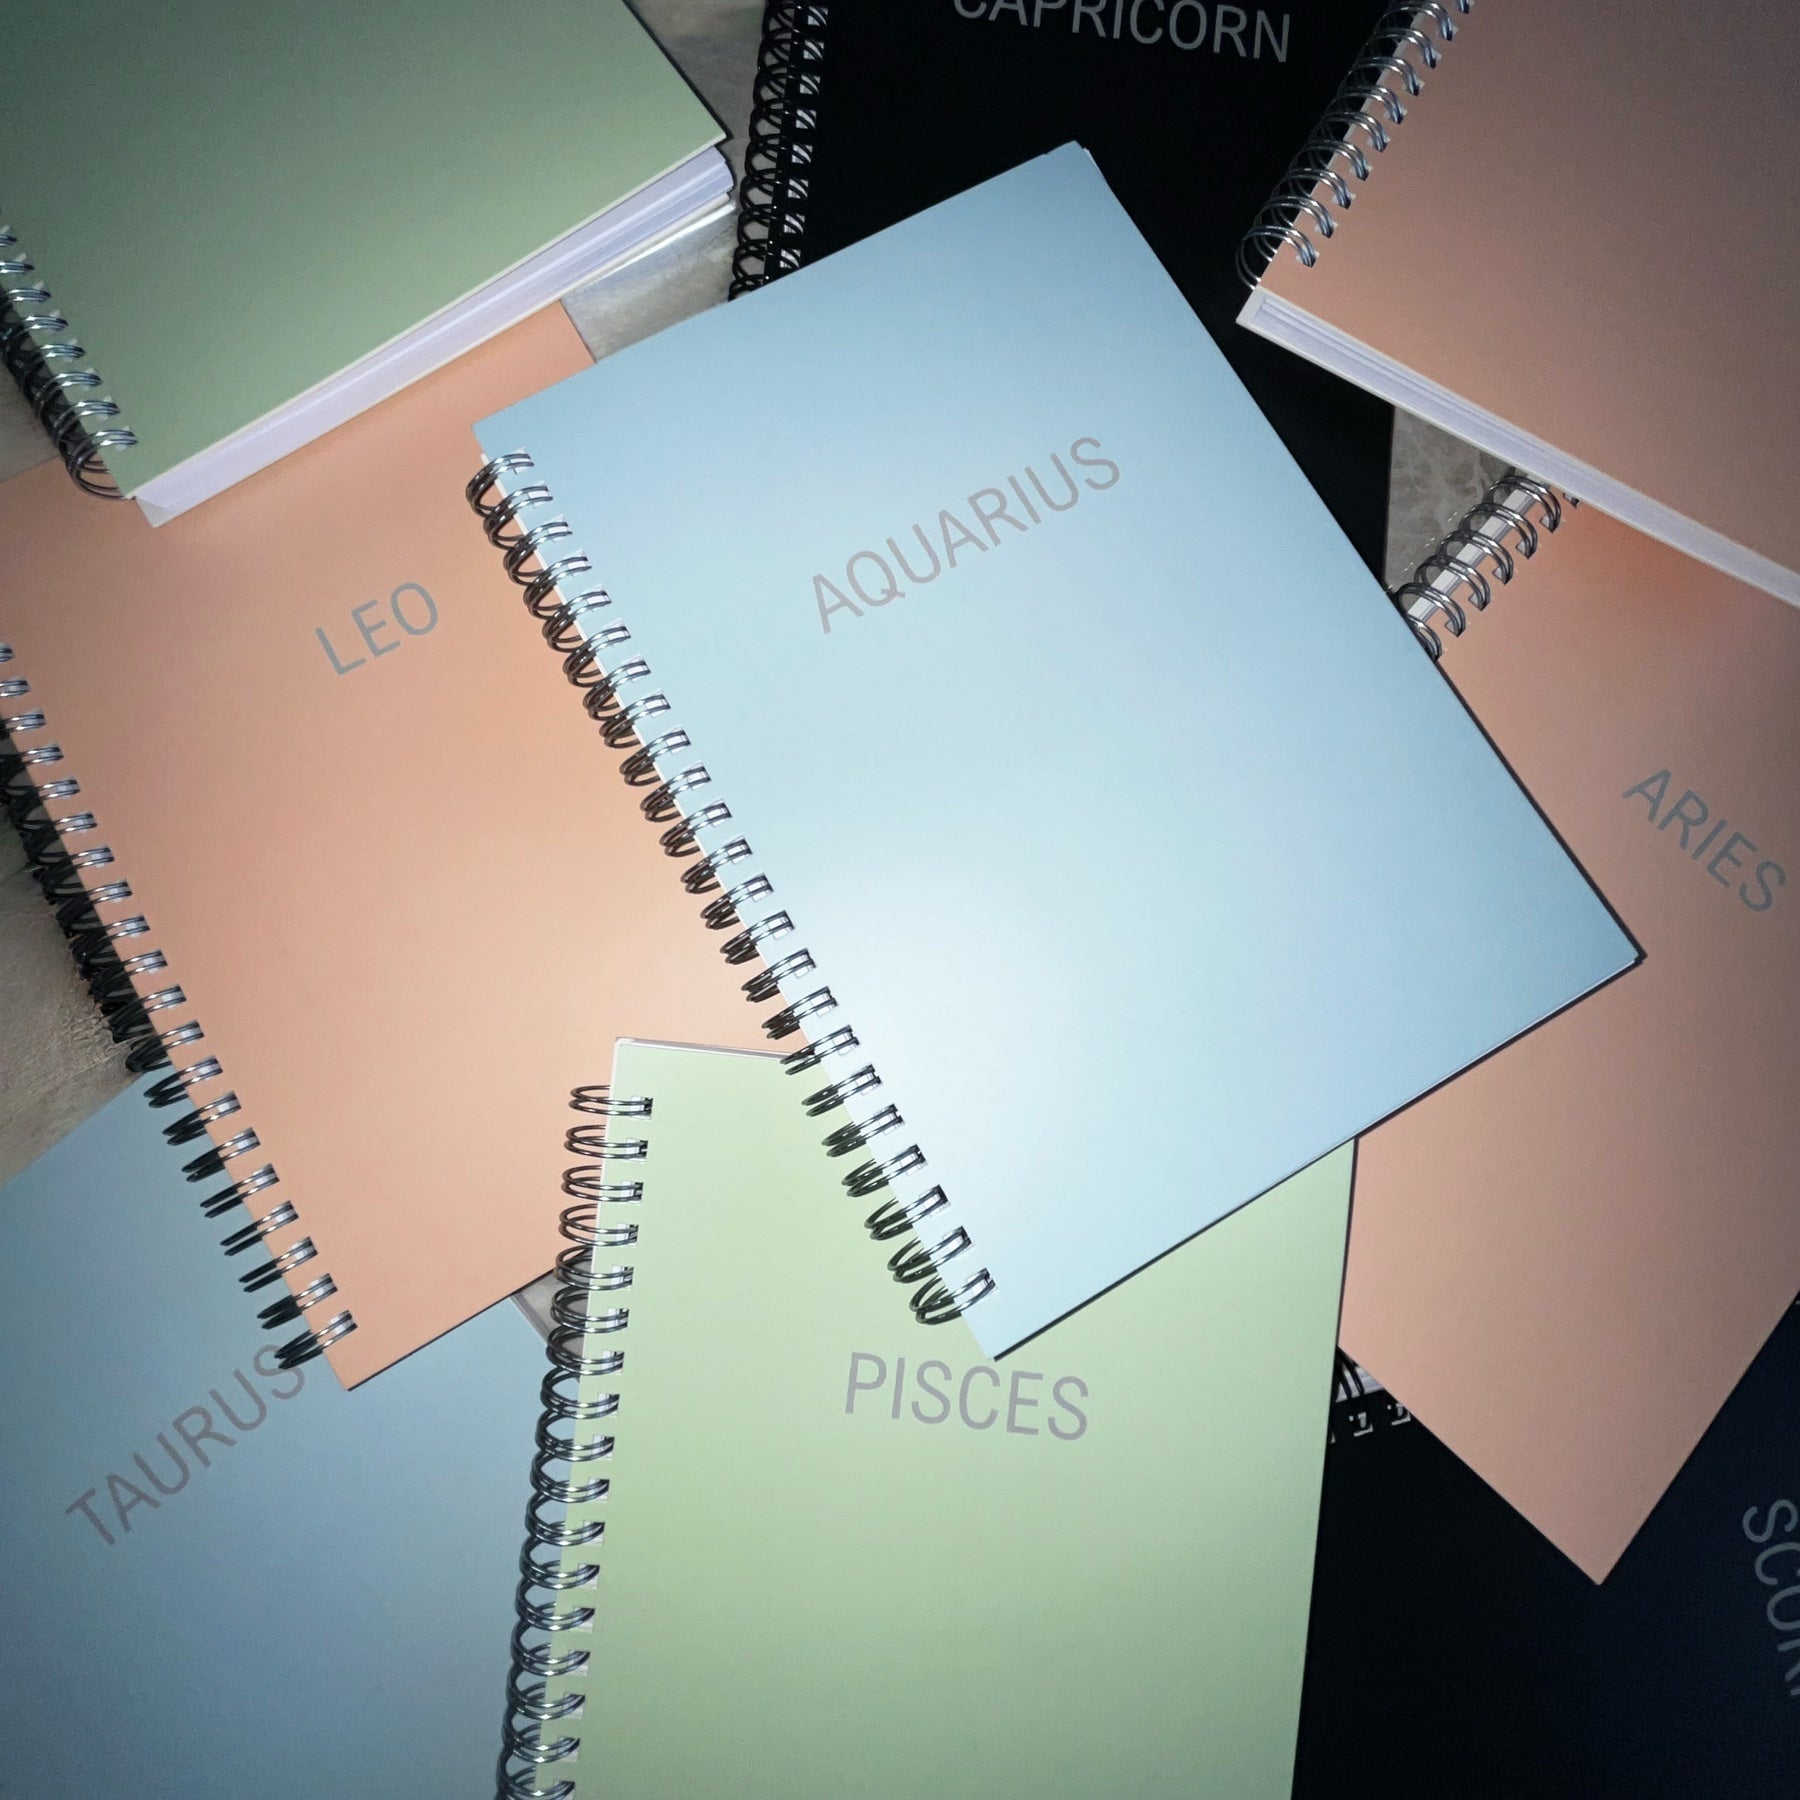 notebooks, A5 notebook, spiral notebook, small notebook, best notebooks, Taurus sign, Taurus, Taurus gifts, zodiac gifts